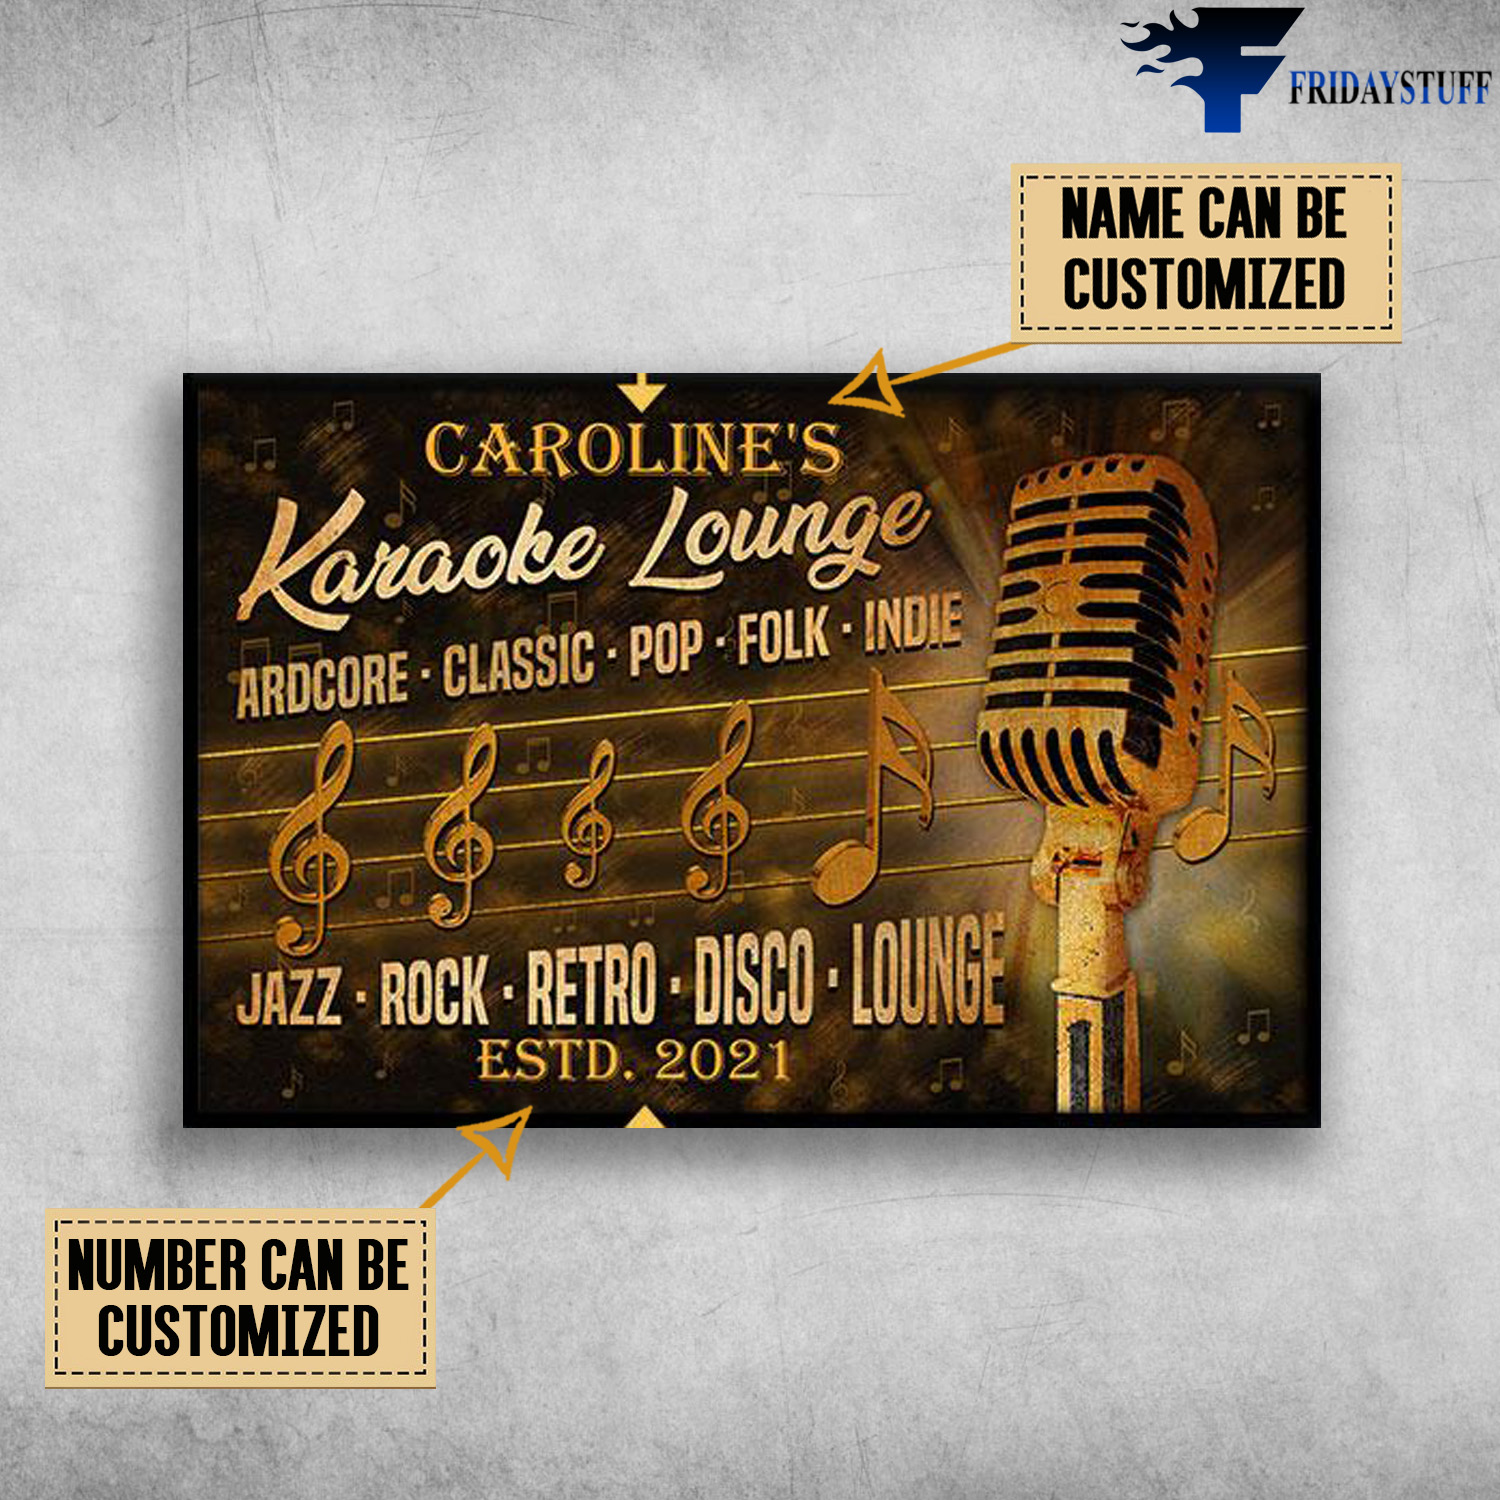 Karaoke Lounge, Ardcore, Classic, Pop, Folk, Indie, Jazz, Rock, Retro, Disco, Lounge